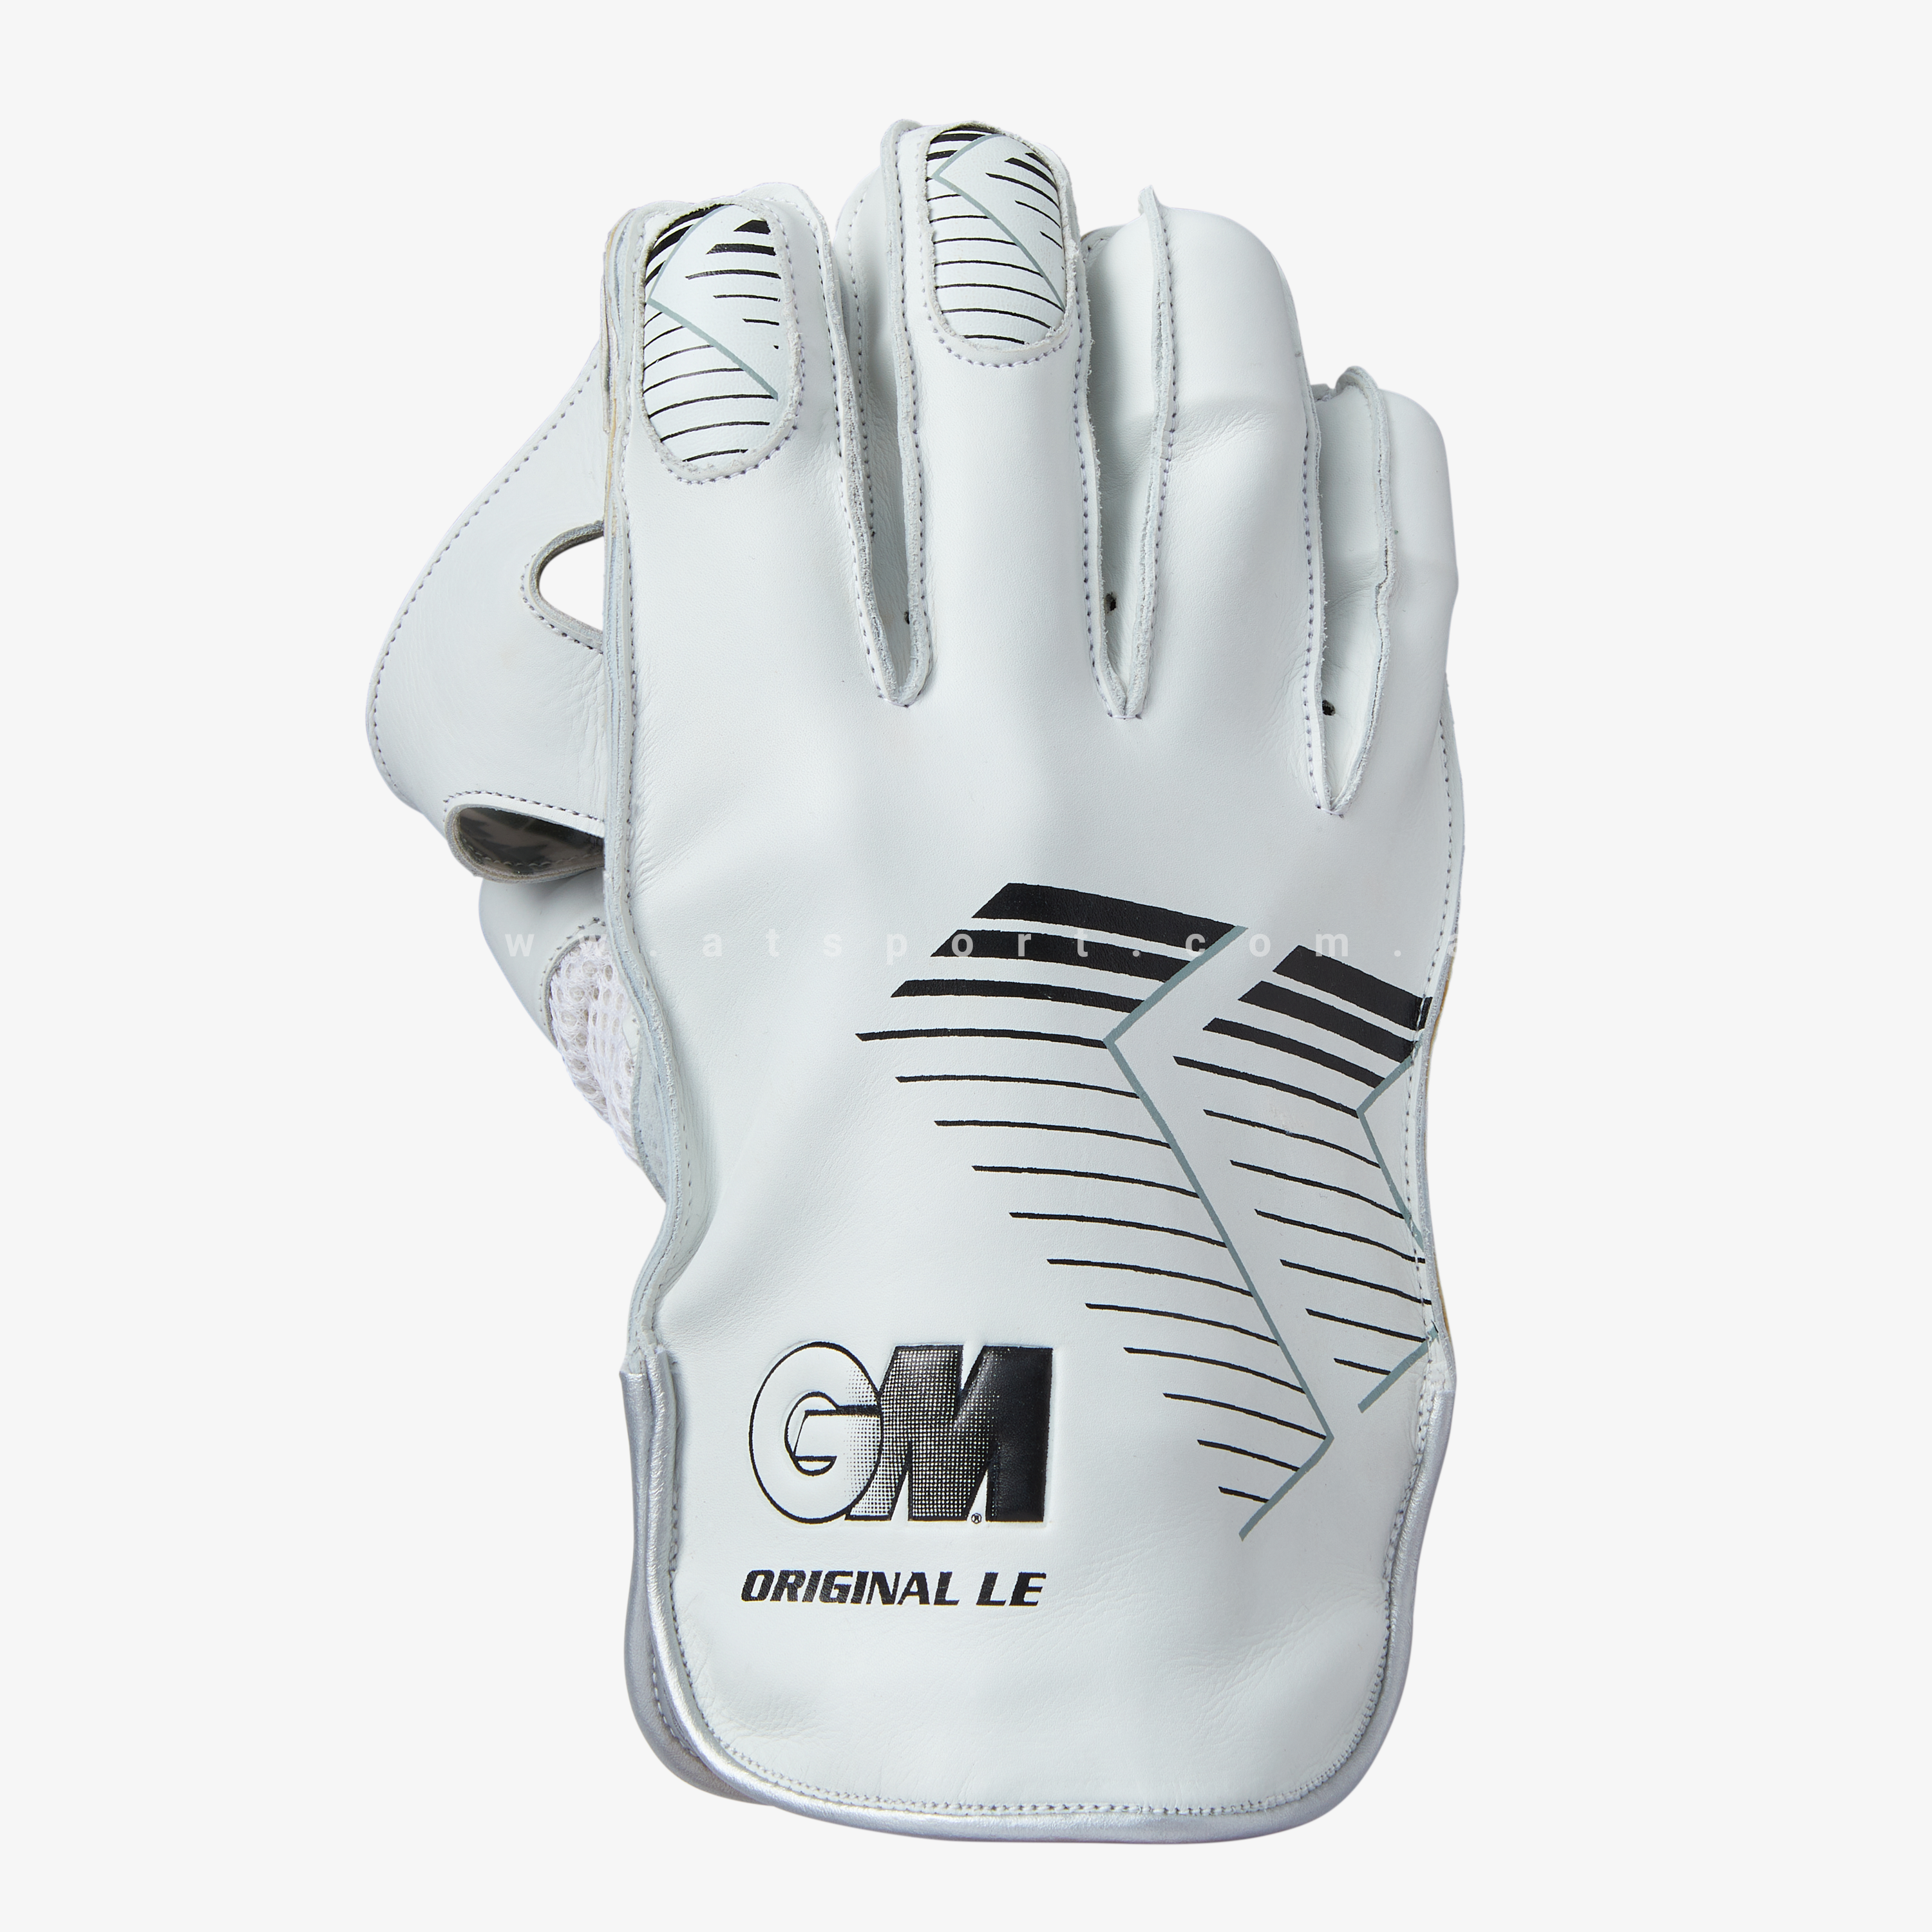 GM Original L.E Wicket Keeping Gloves - ADULT